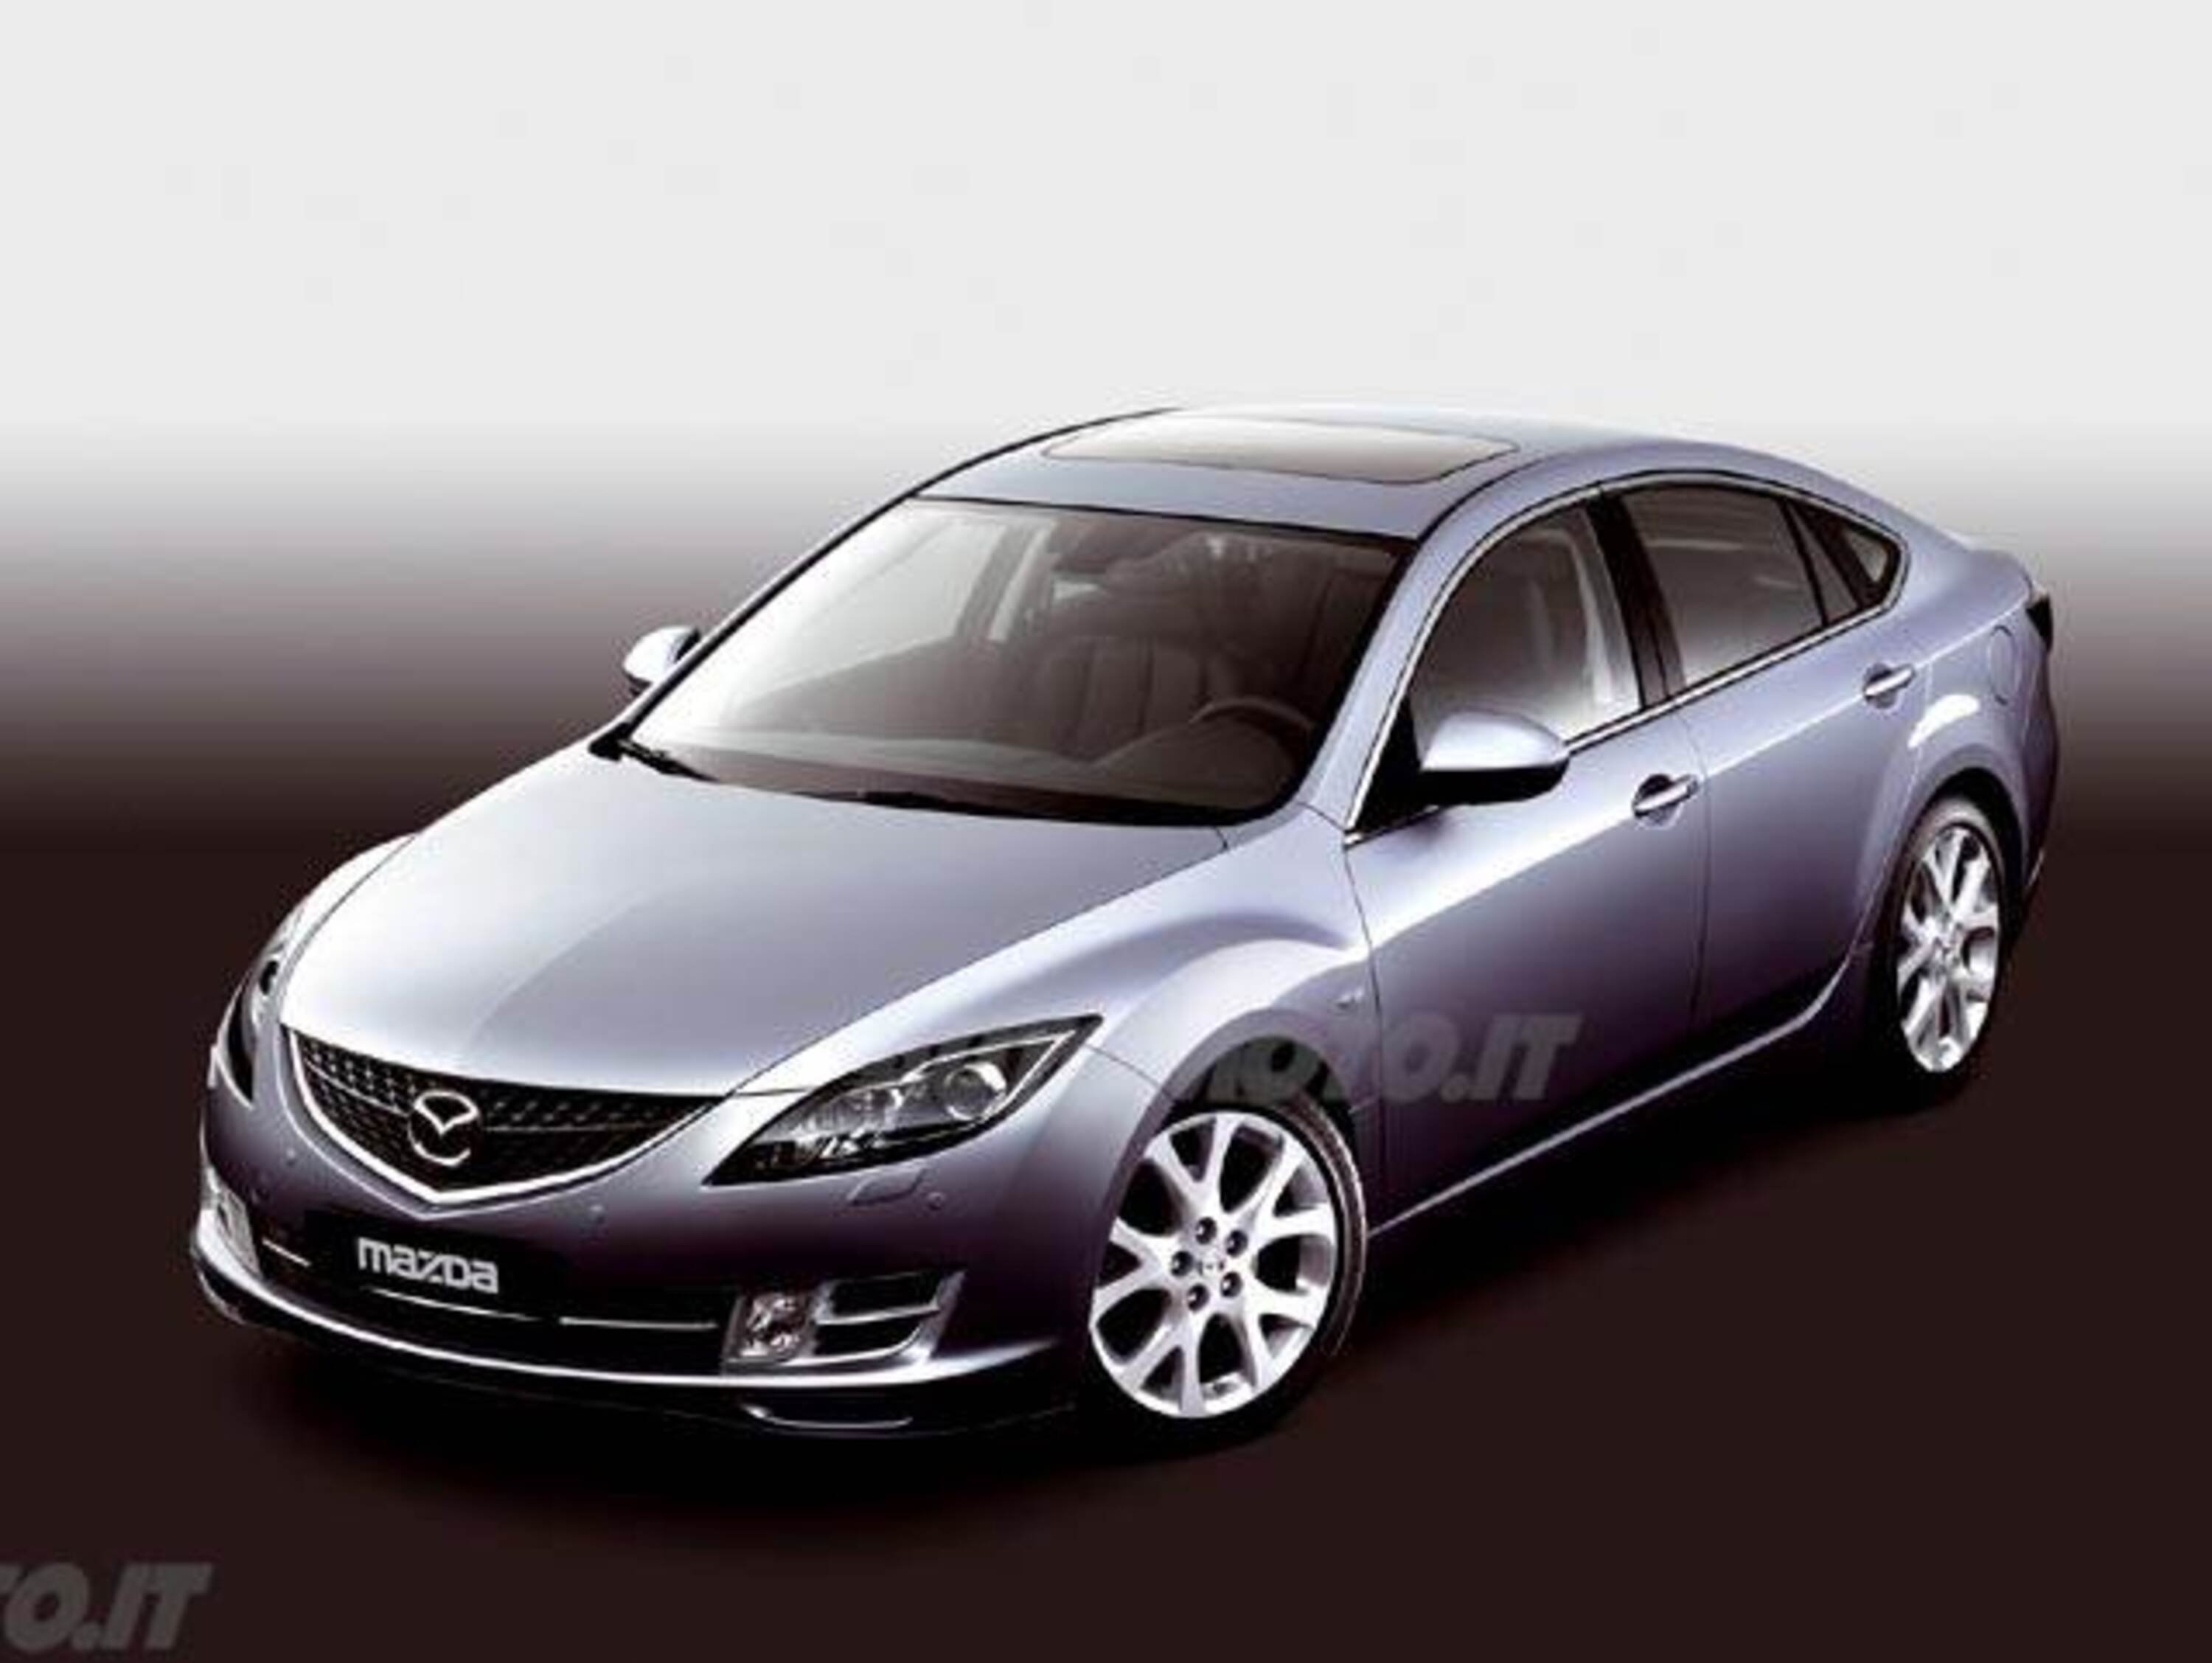 Mazda Mazda6 Hatchback 2.2 CD 16V 185CV Sp. Tour. Luxury